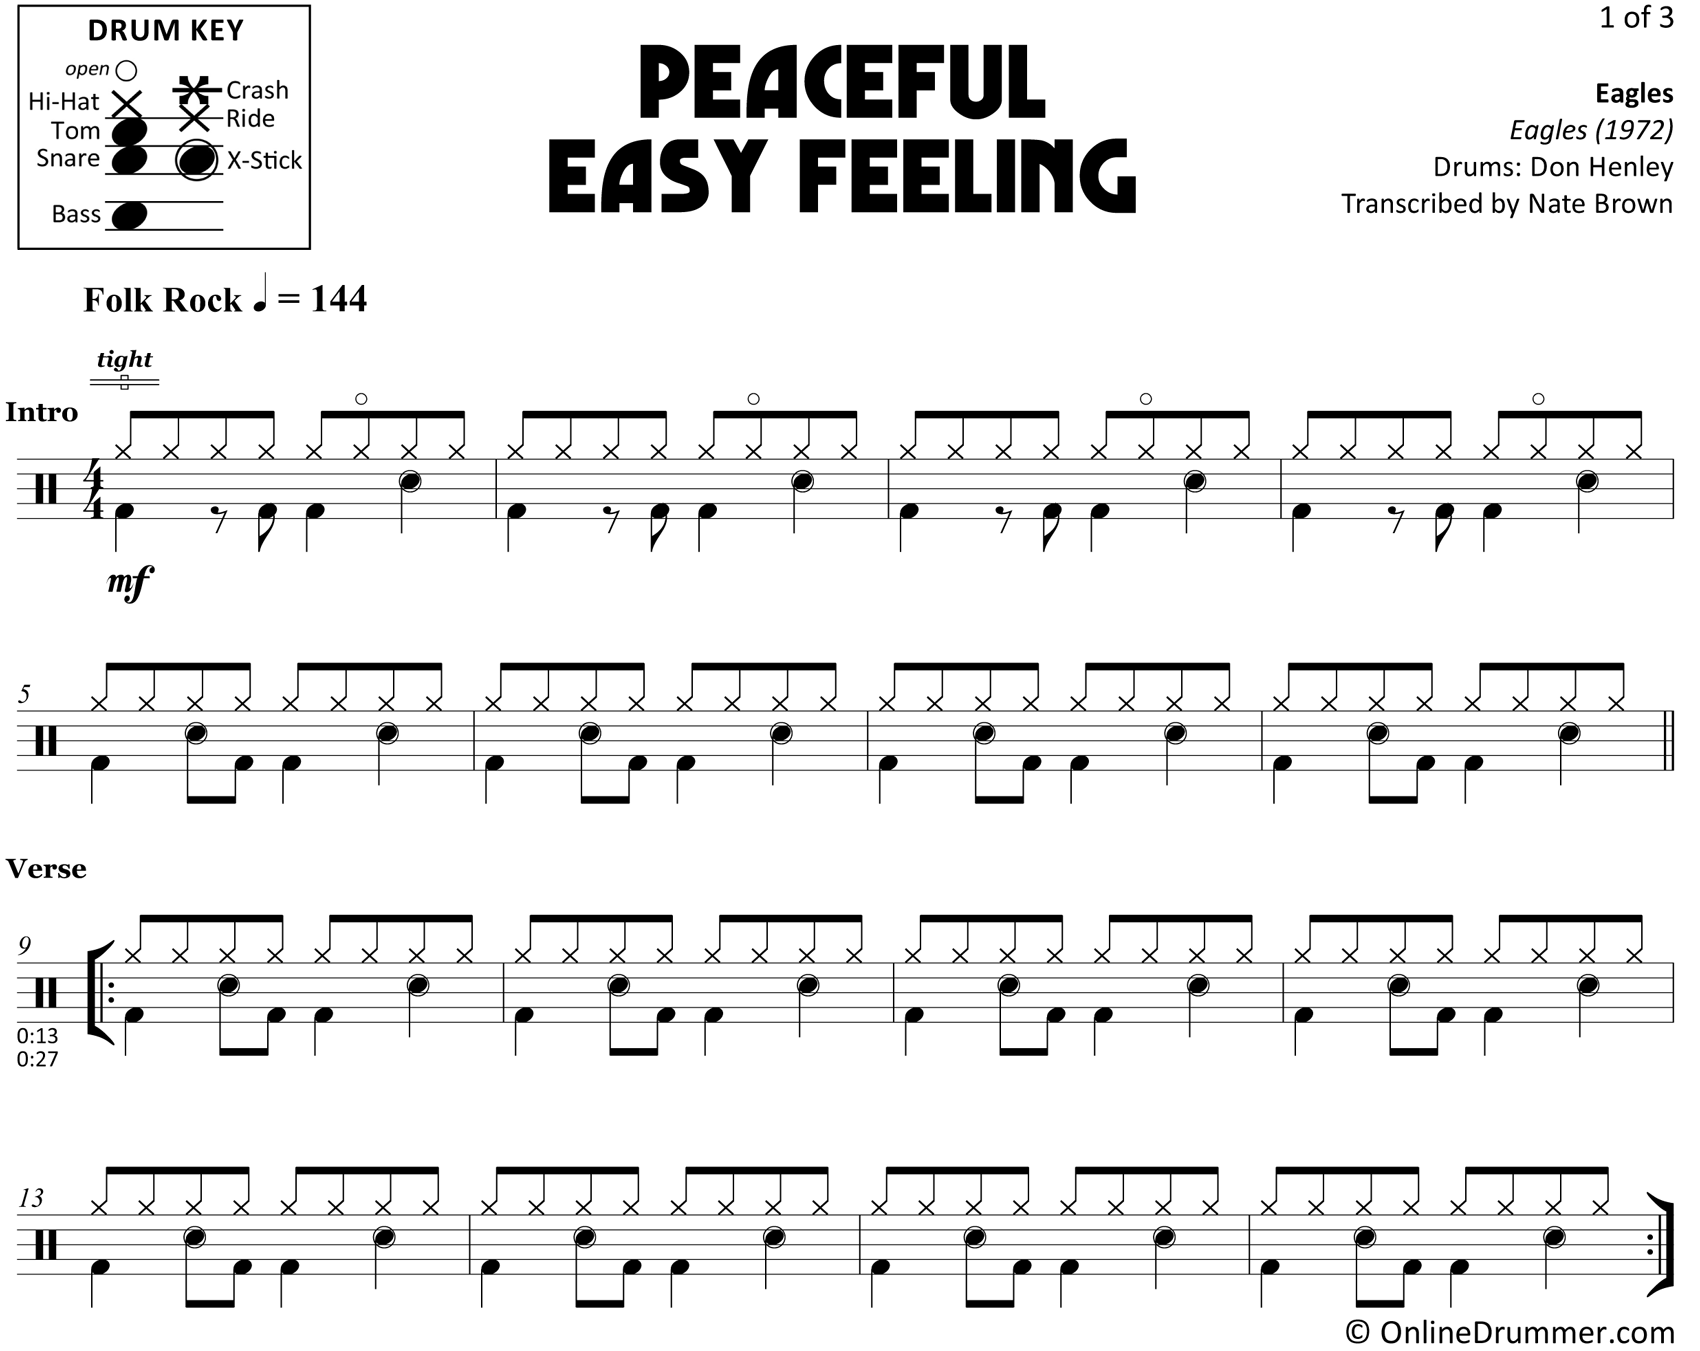 Peaceful Easy Feeling - Eagles - Drum Sheet Music